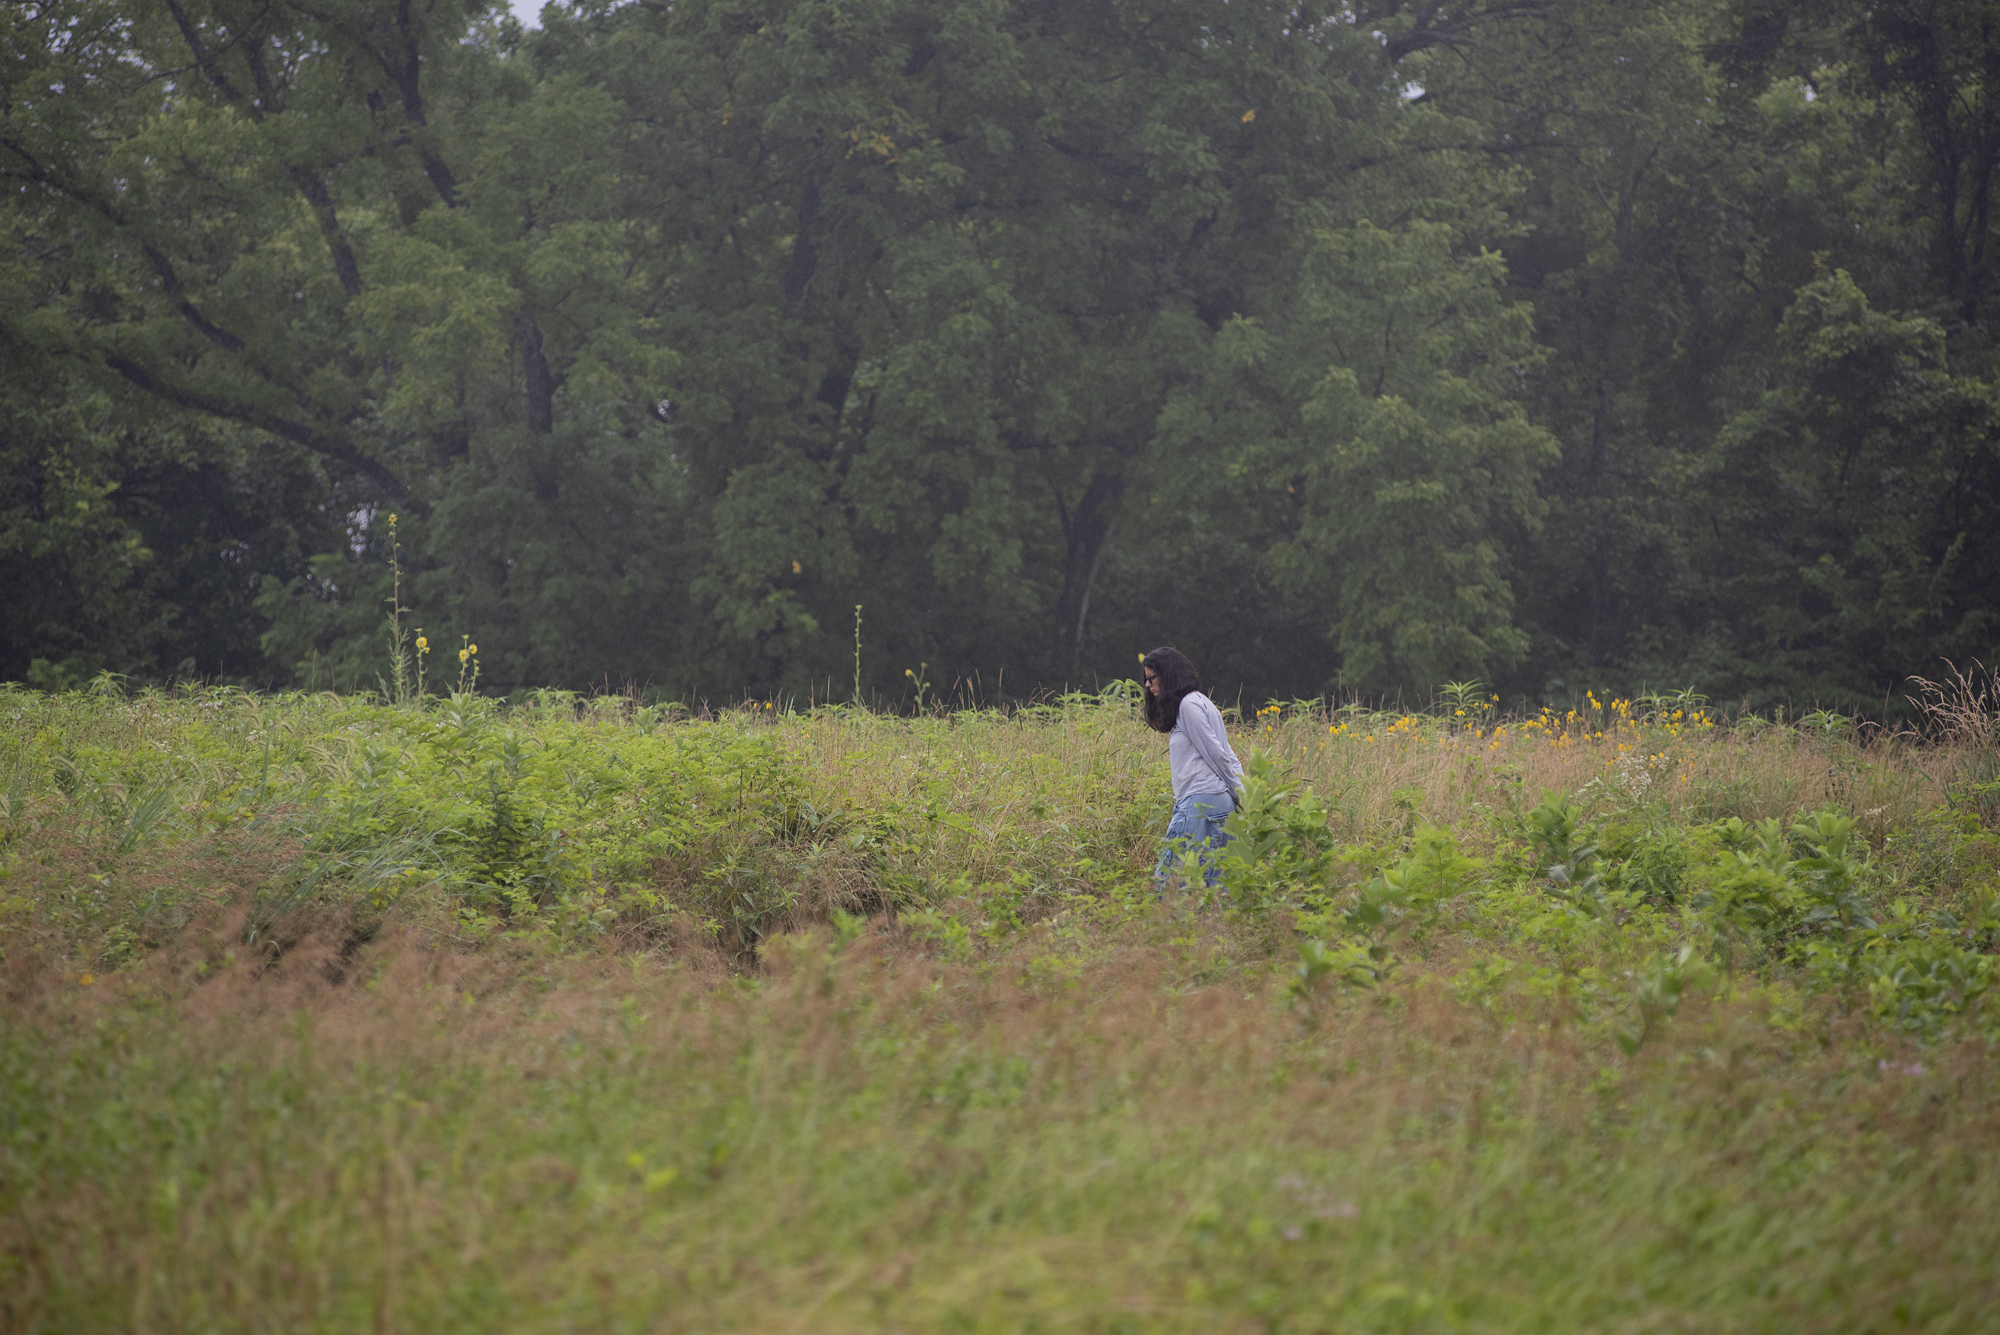 Artist Janine Antoni walks through a large, green field of prairie grass